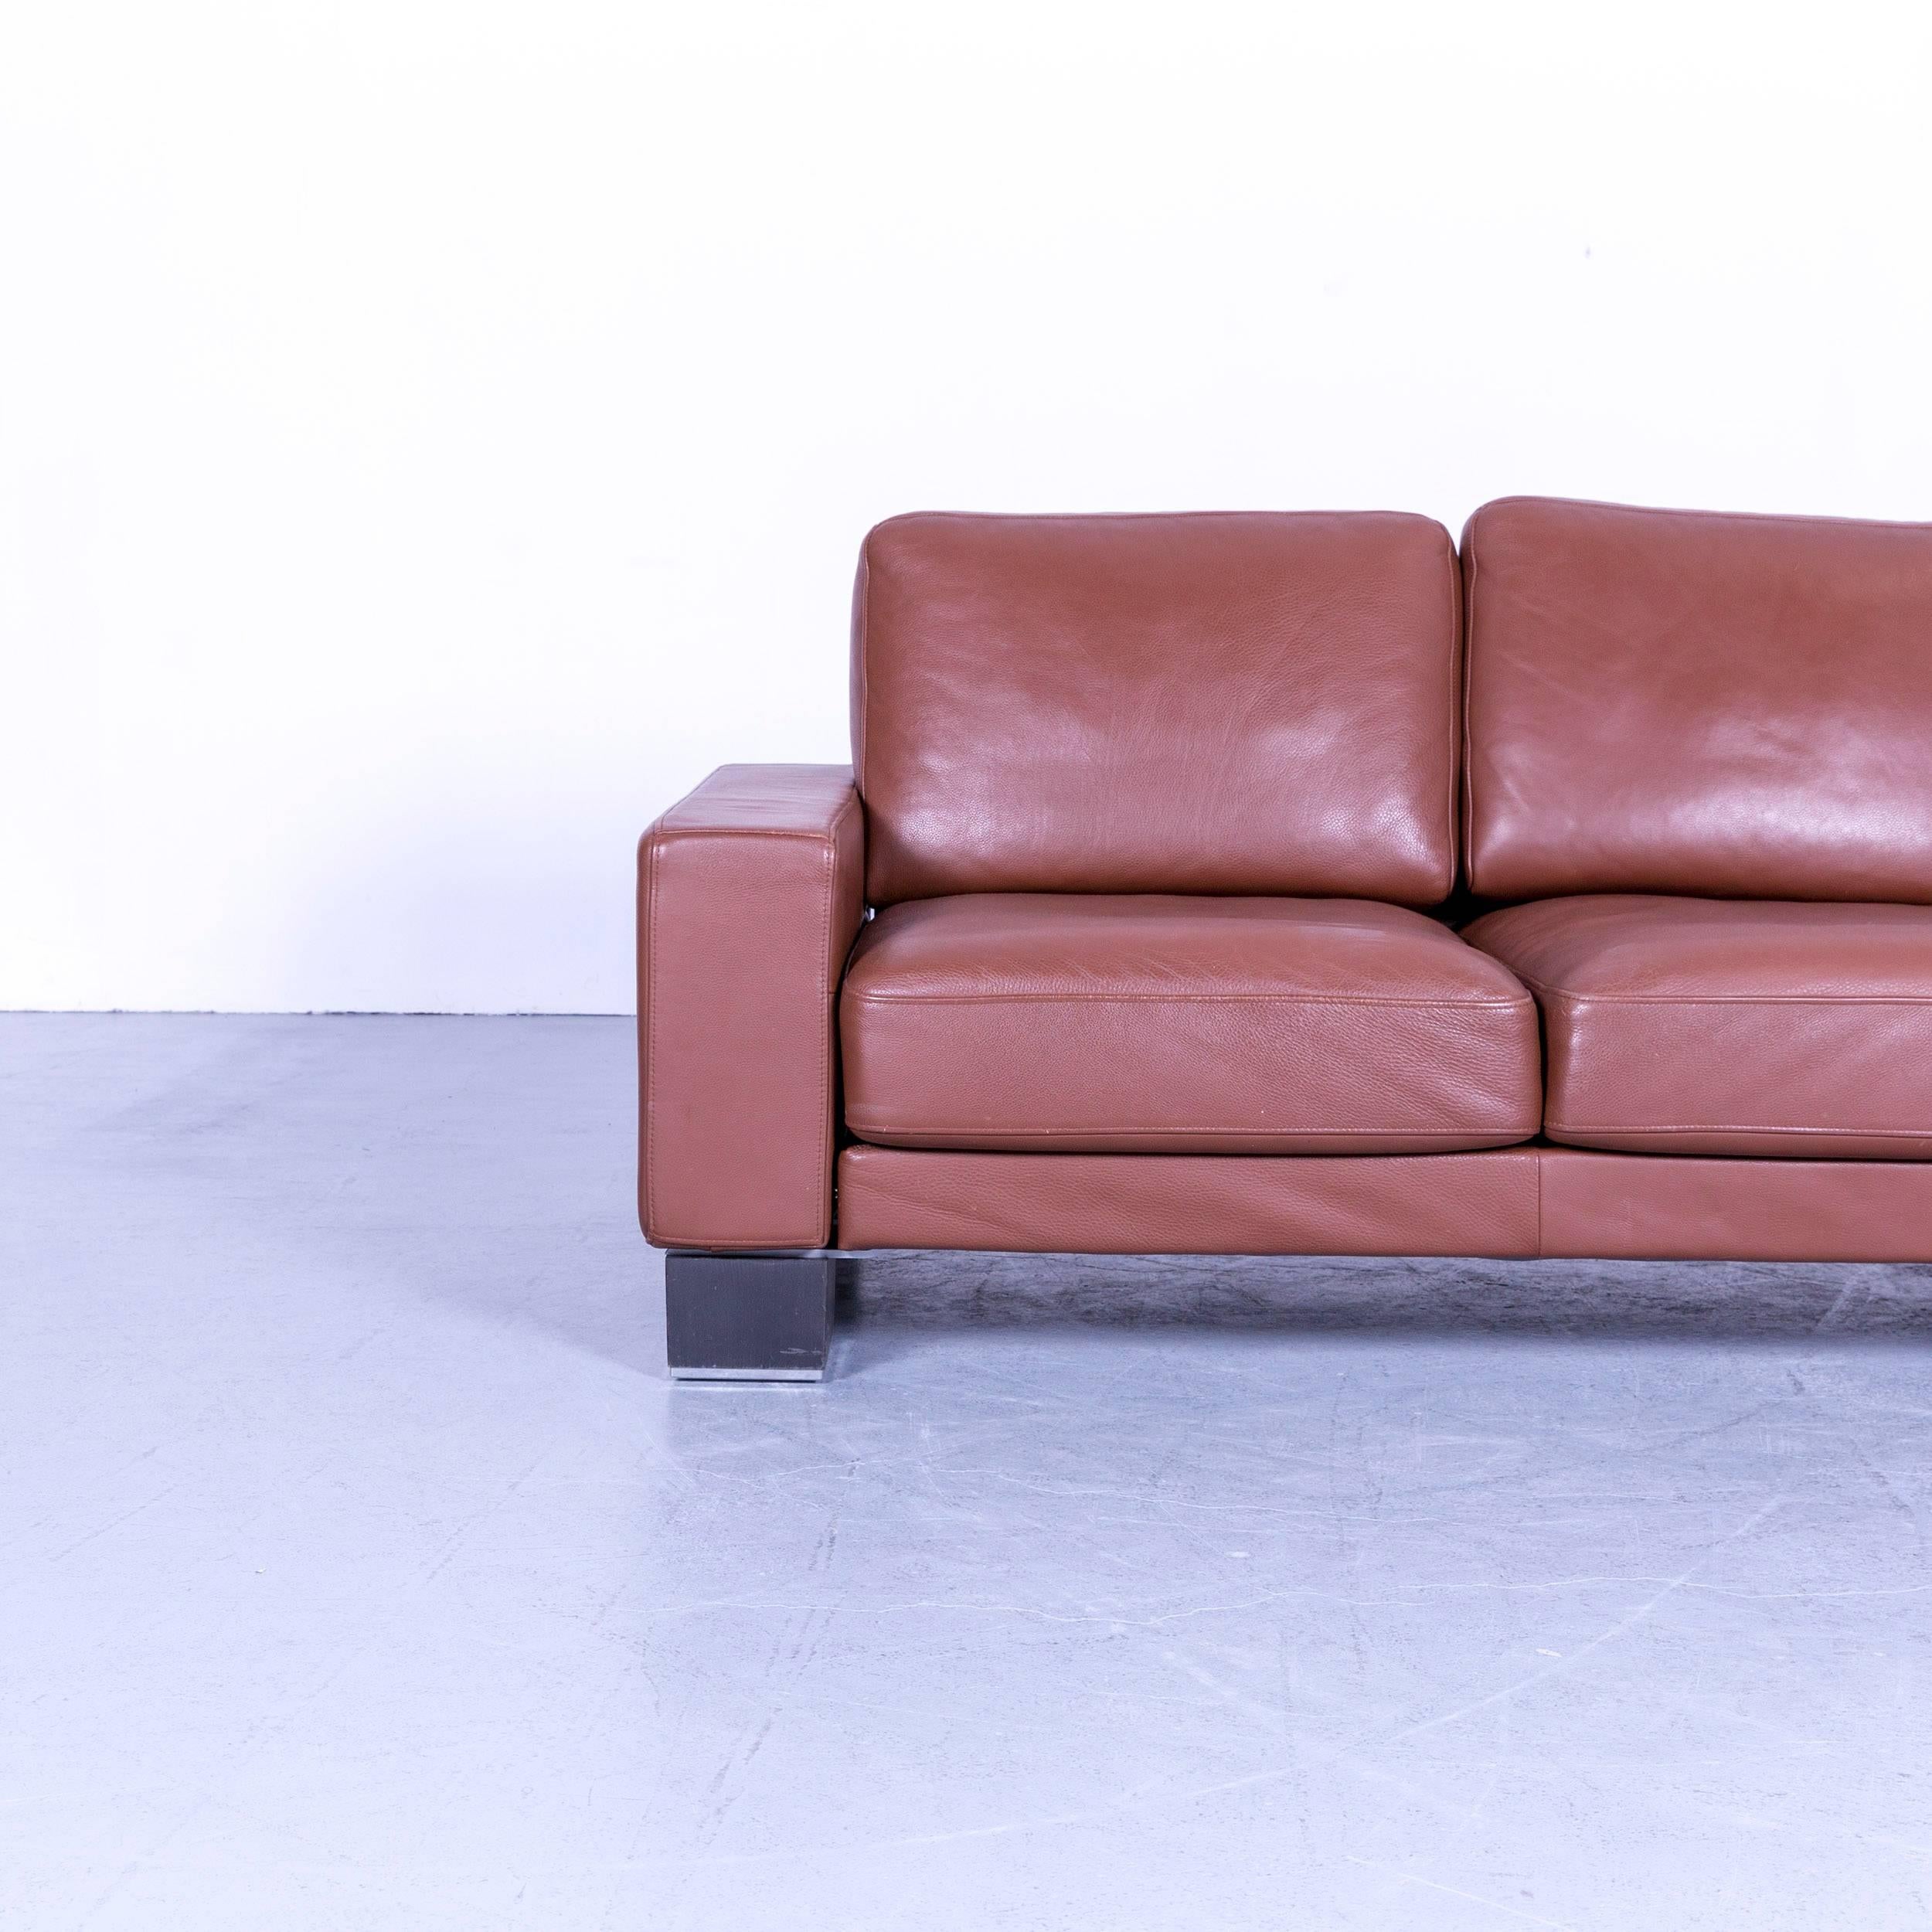 German Rolf Benz Ego Designer Leather Sofa Brown Two-Seat